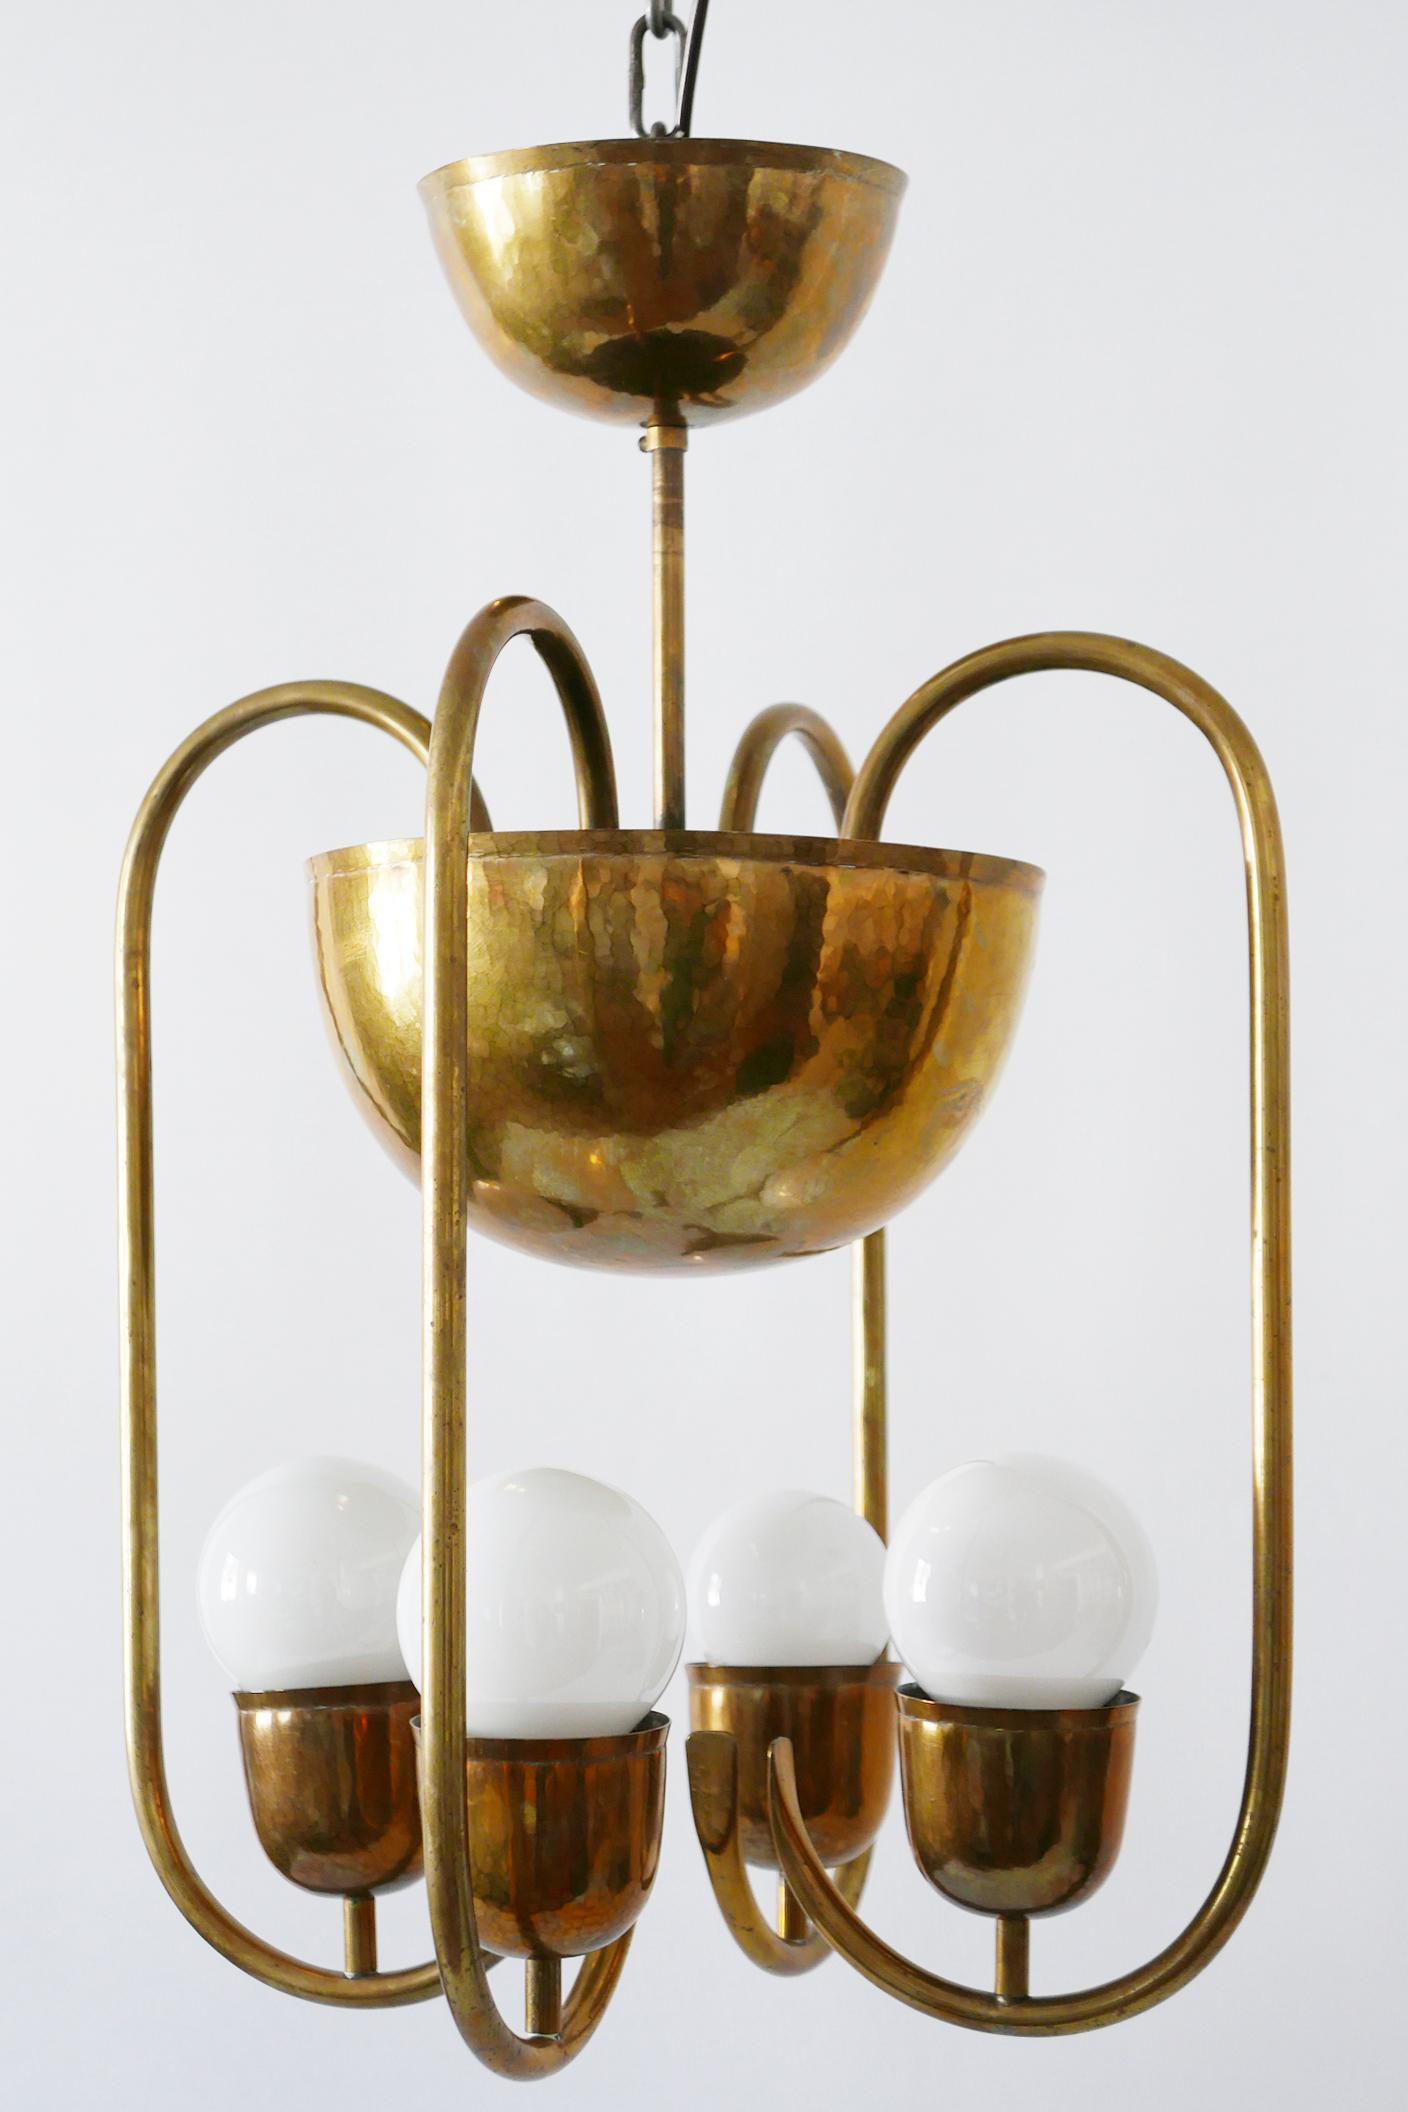 Hammered Unique Bauhaus Art Deco Brass Chandelier or Pendant Lamp by Hayno Focken 1930s For Sale